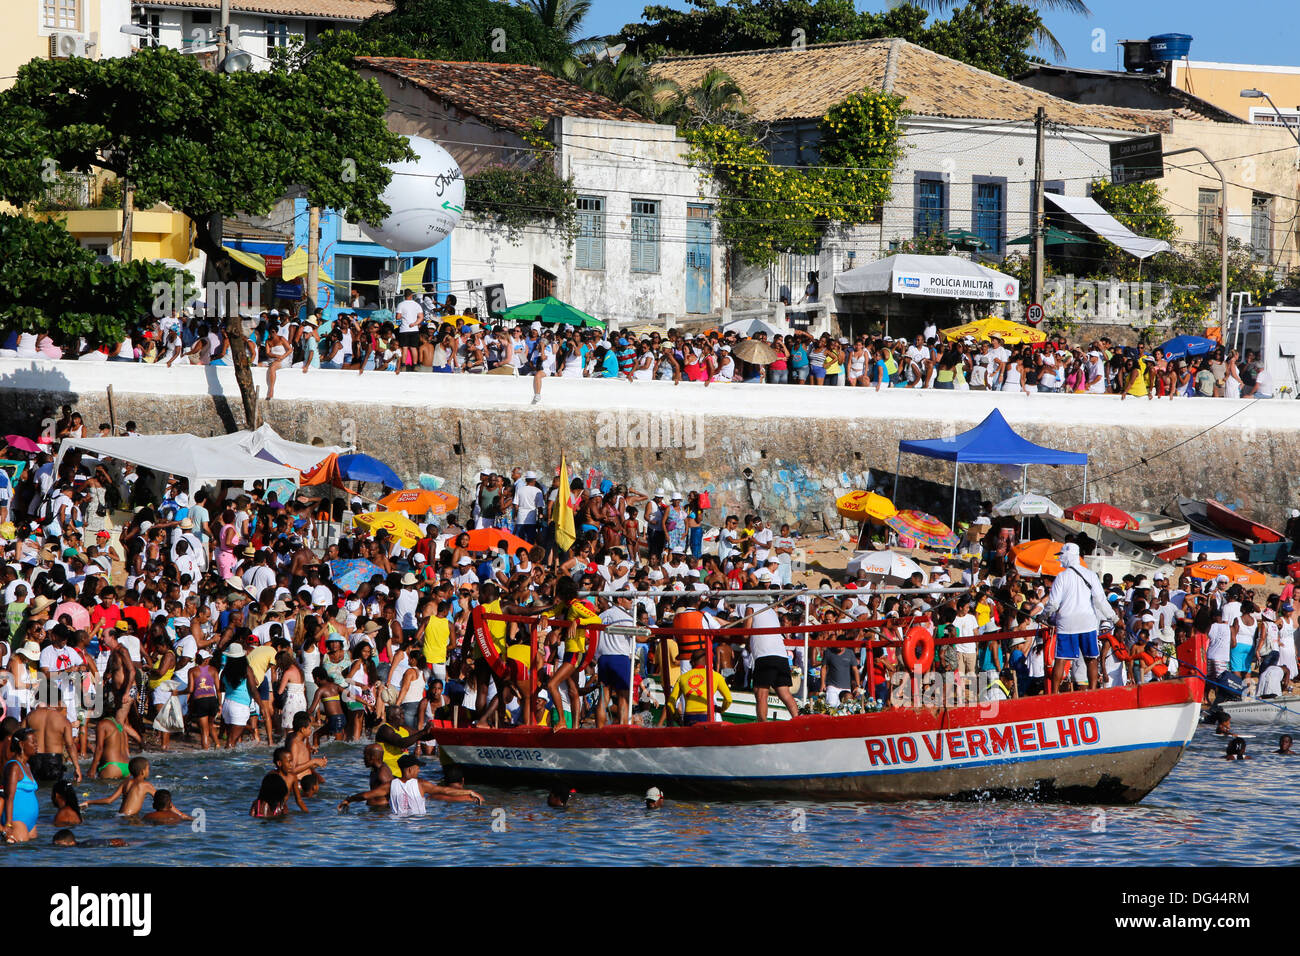 Lemanja festival in Rio Vermelho, Salvador, Bahia, Brazil, South America Stock Photo